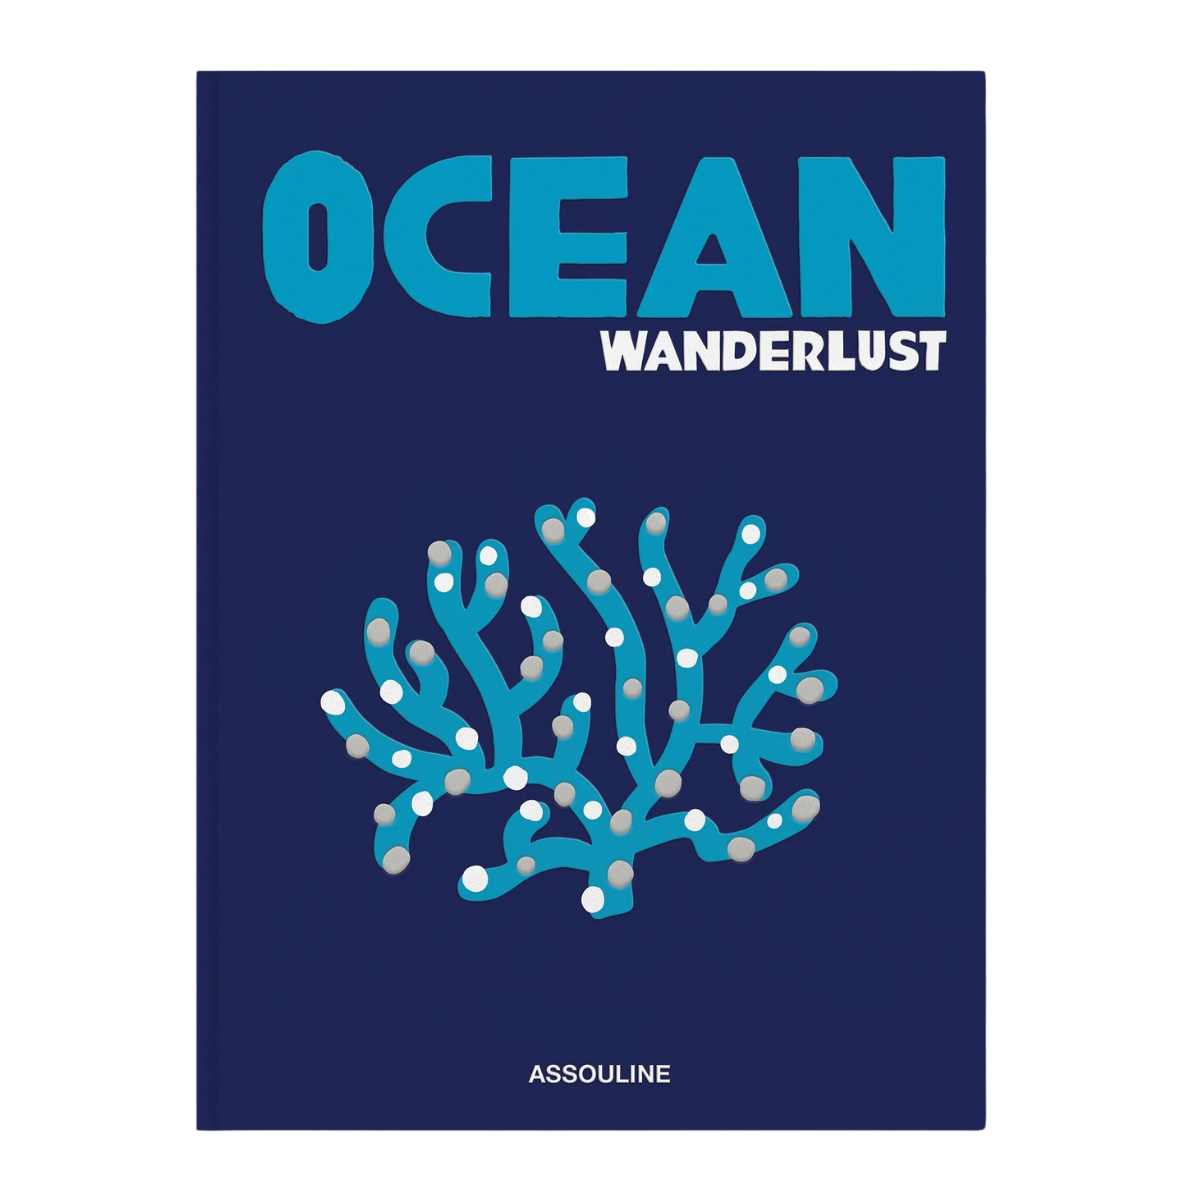 "Ocean Wanderlust"